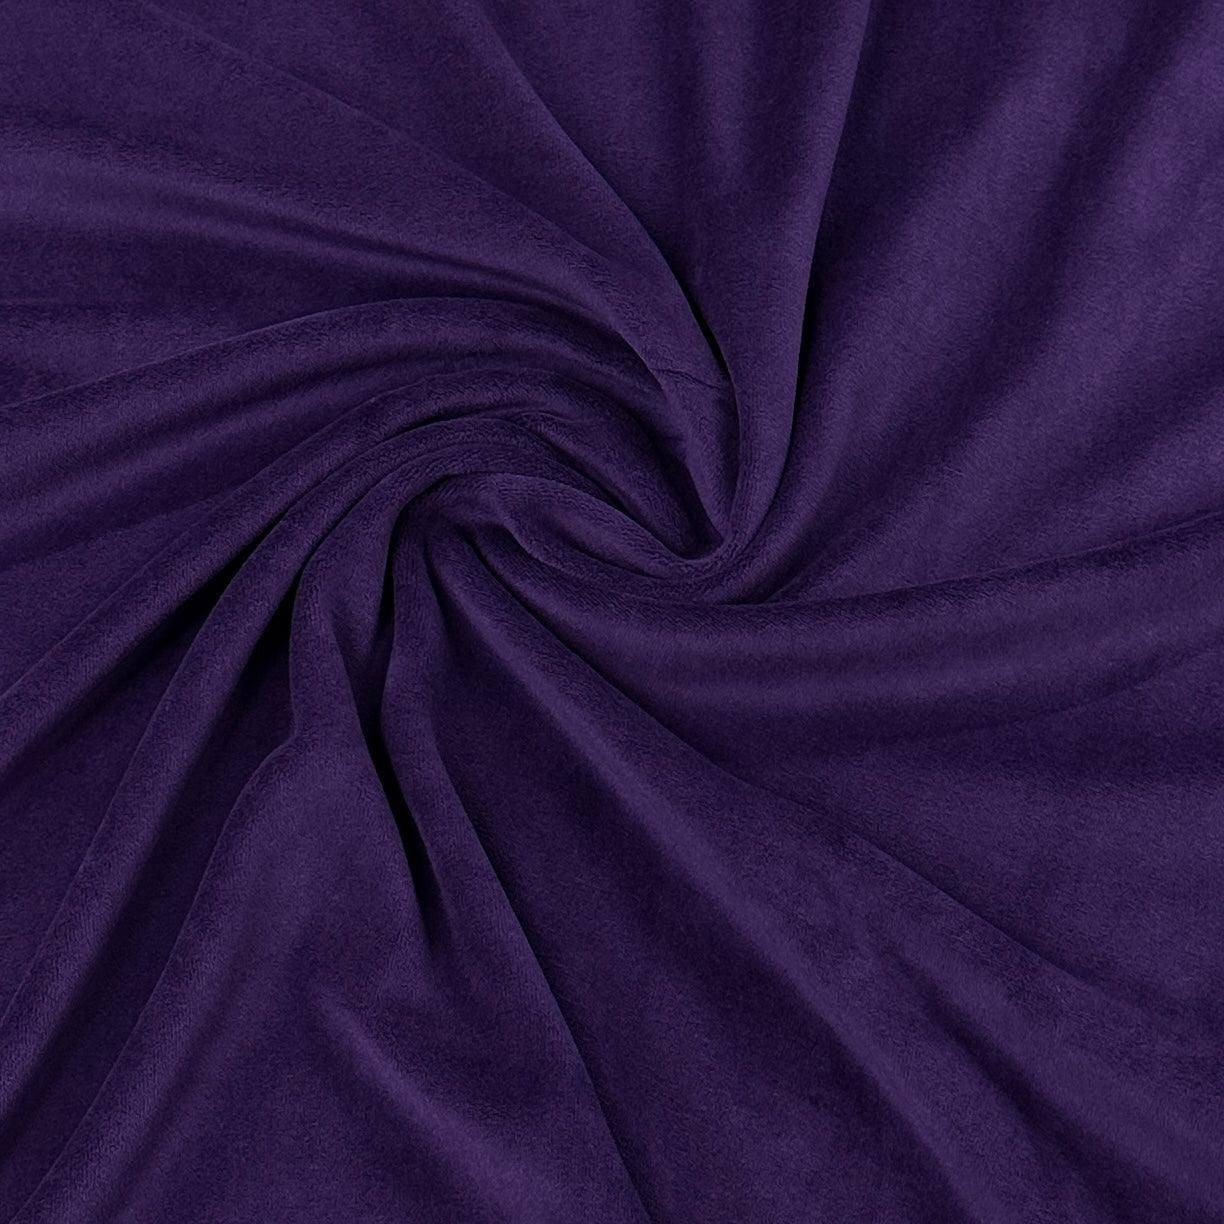 Amethyst Organic Cotton Velour Fabric, $10.59/yd, 15 yards - Nature's Fabrics